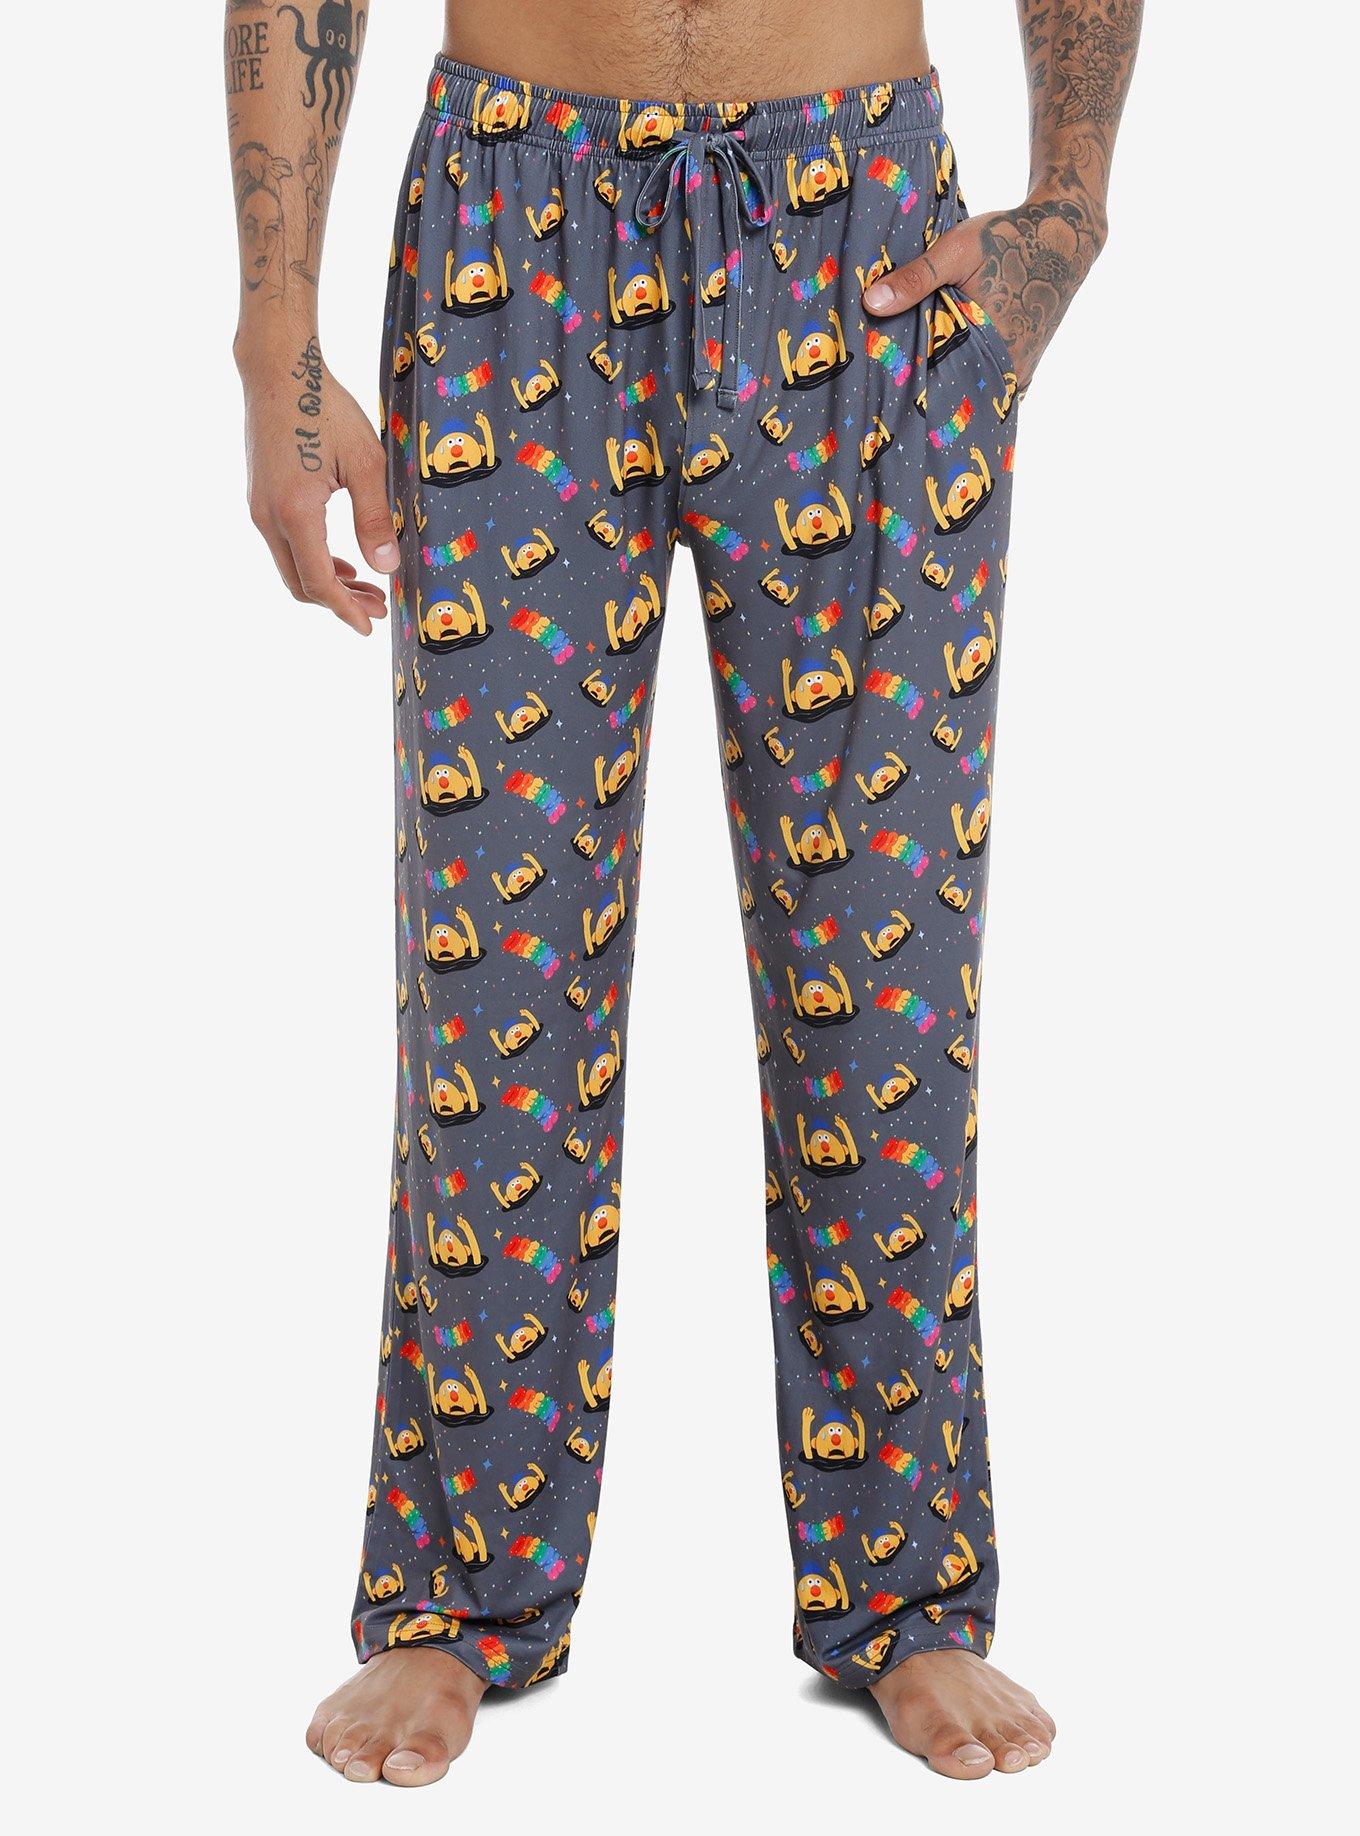 JOE BOXER Mens Plush Onesie Pajamas, Gummy Bears Men's Novelty One